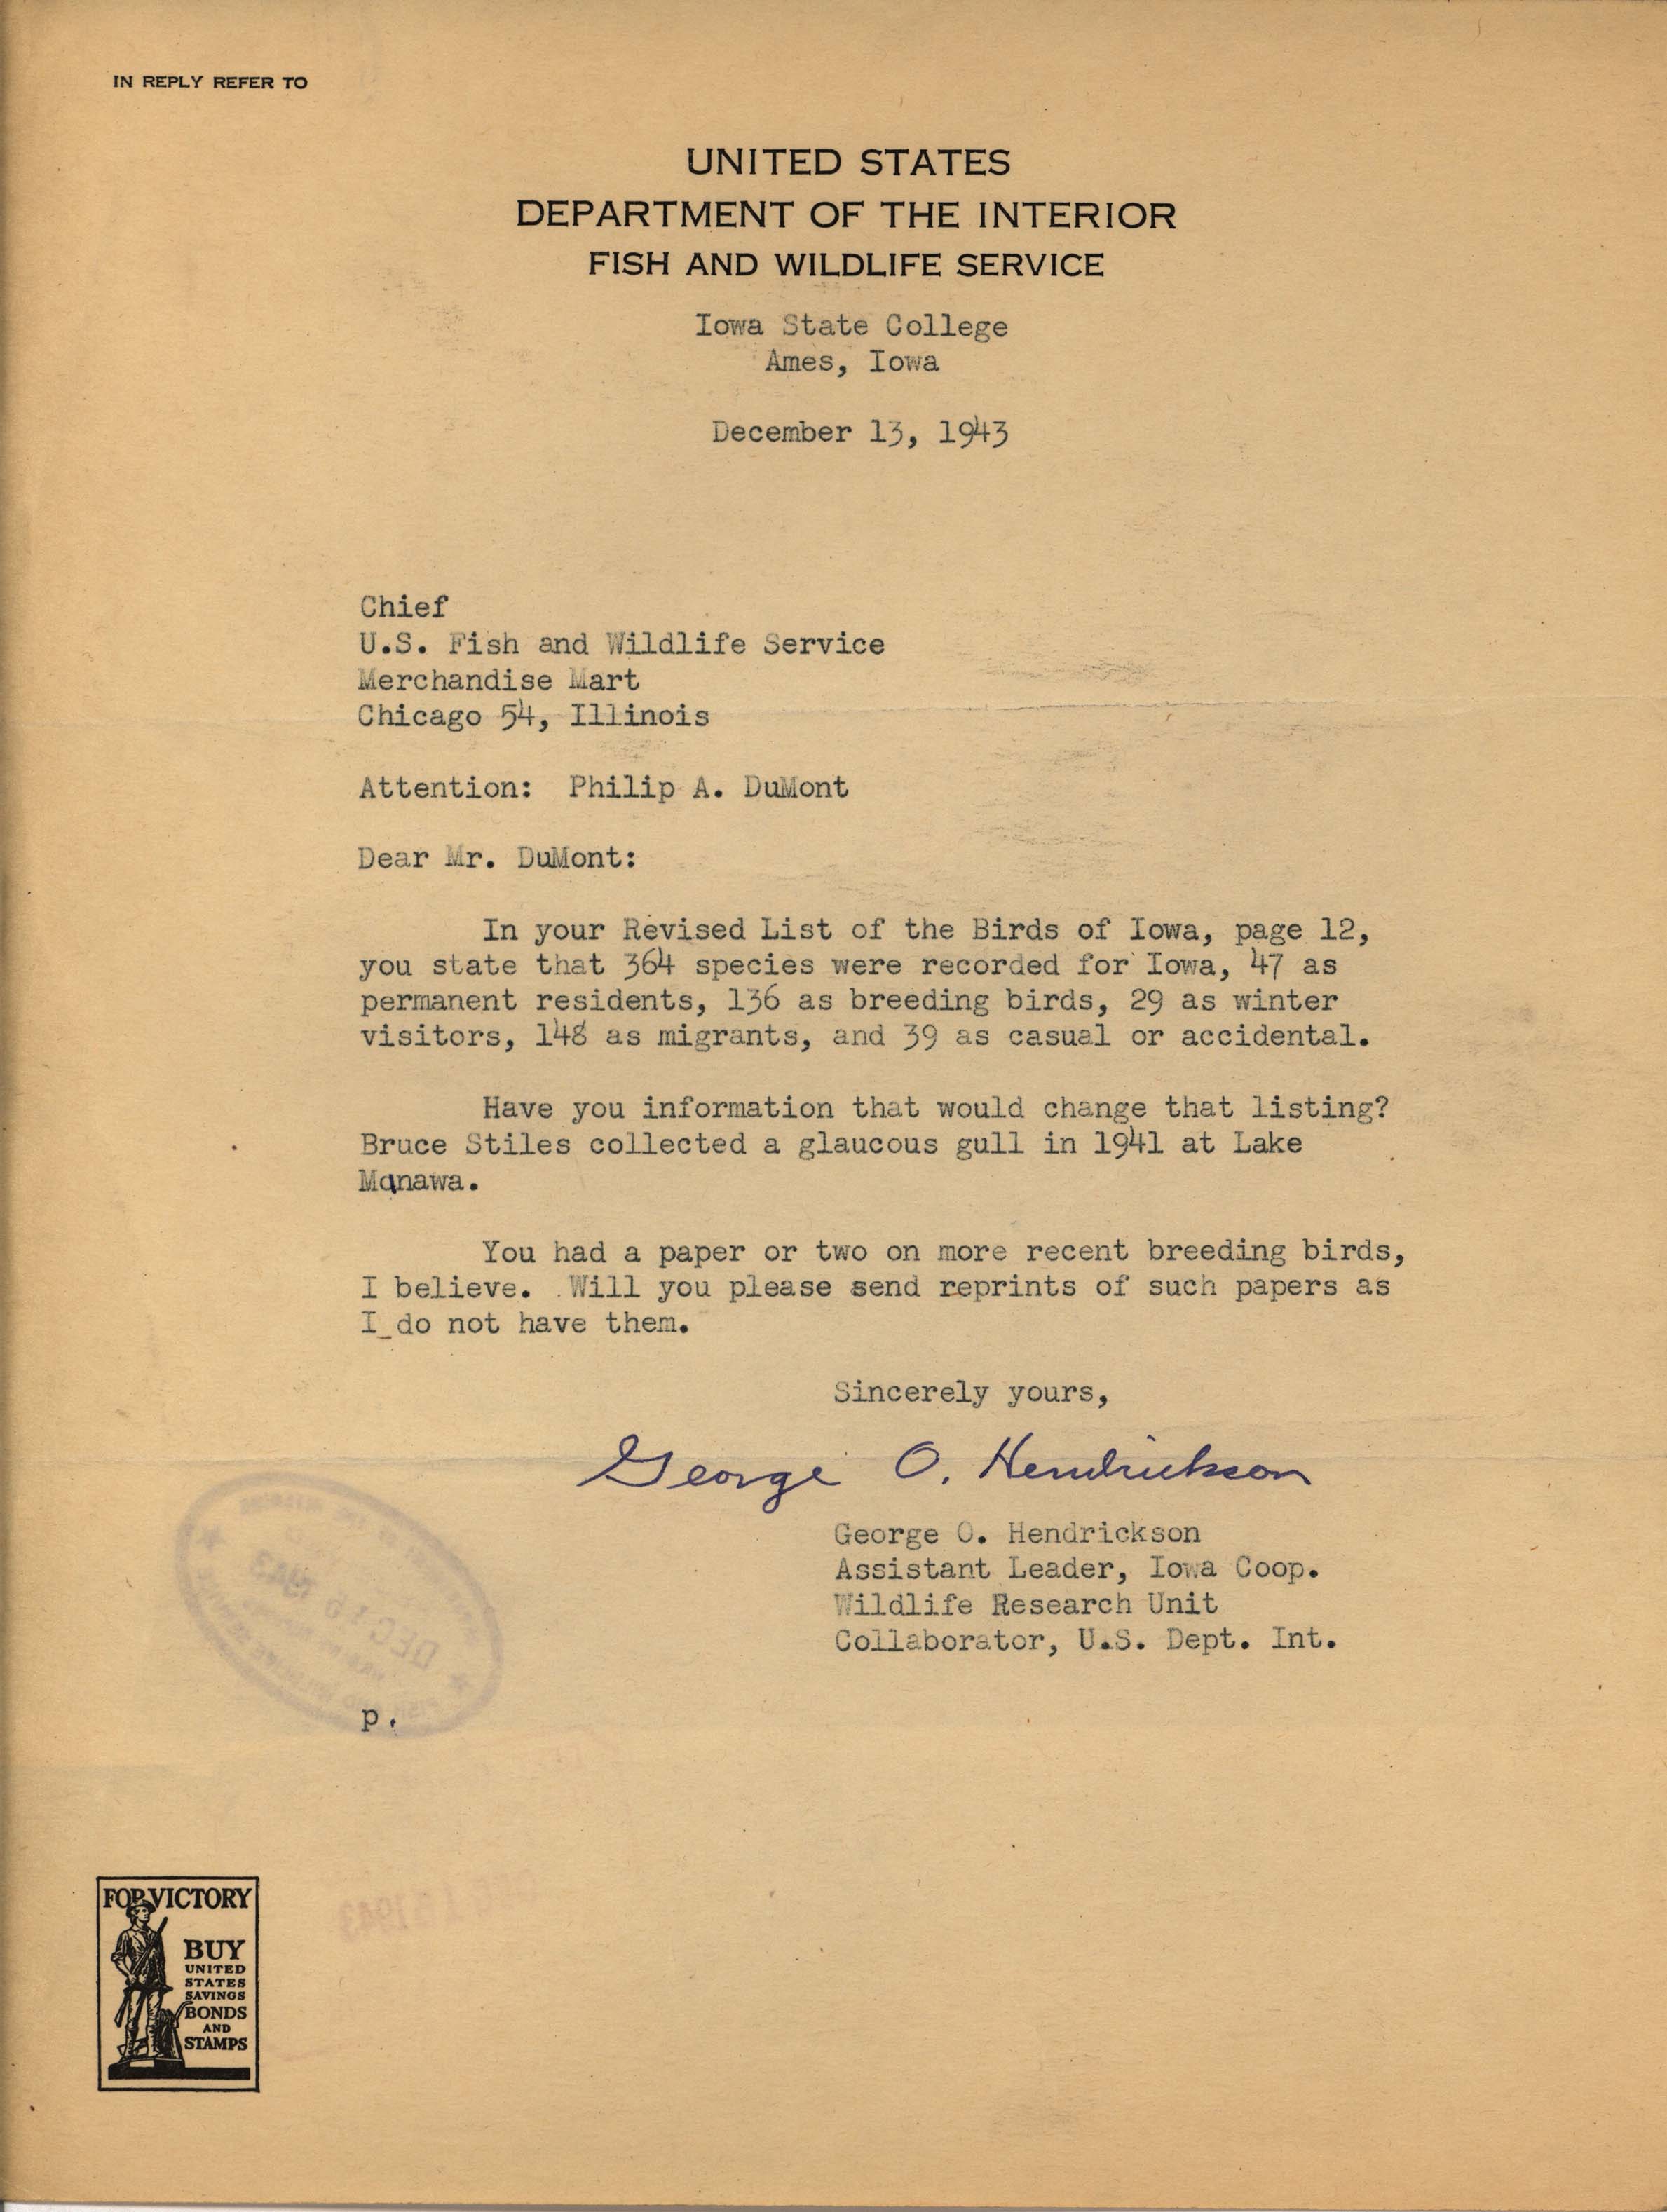 George Hendrickson letter to Philip DuMont regarding updates to the Revised List of the Birds of Iowa, December 13, 1943